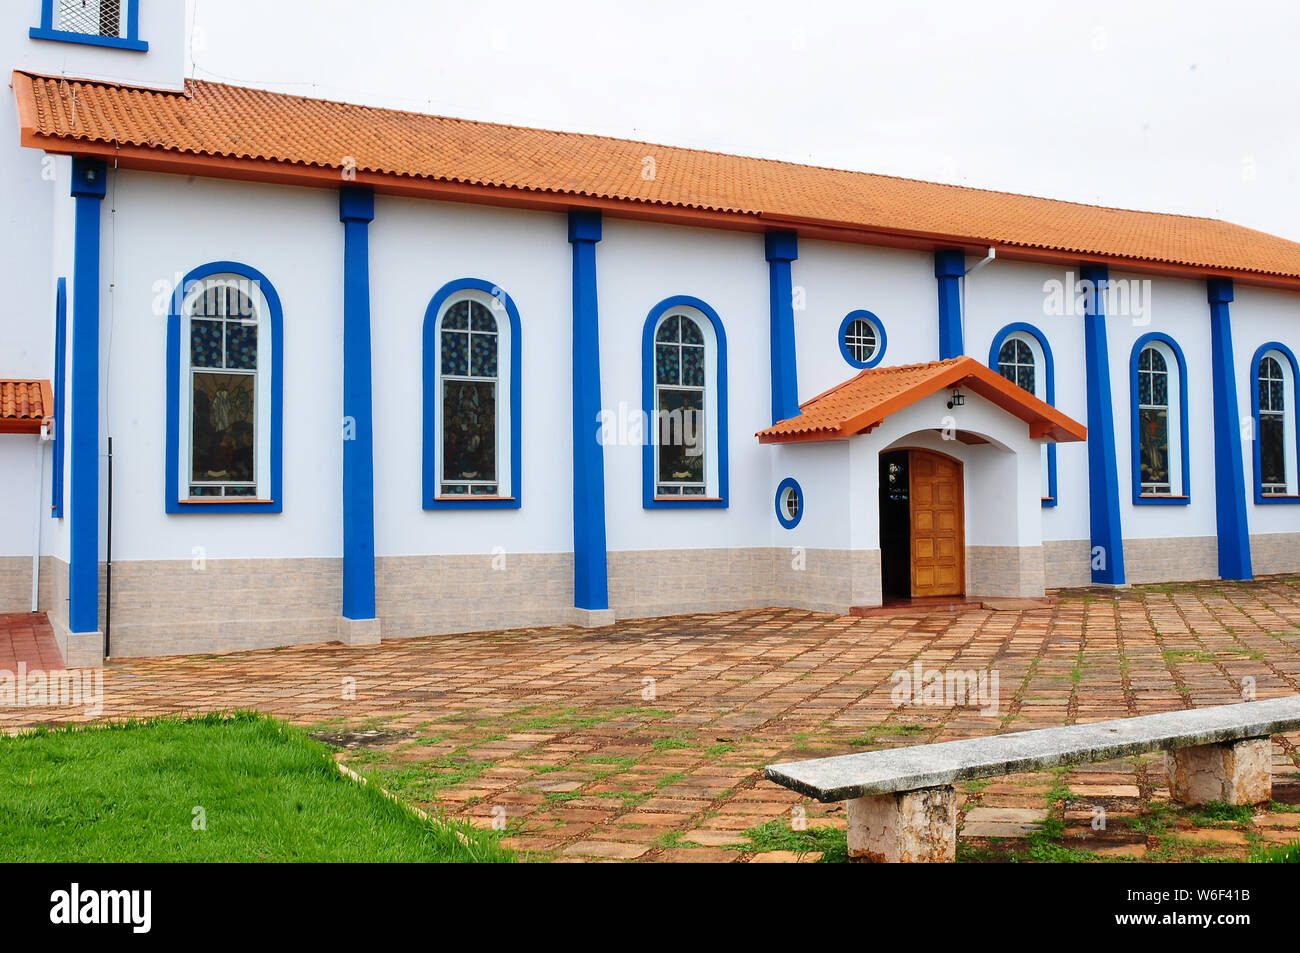 Churches in the interior of Brazil Stock Photo